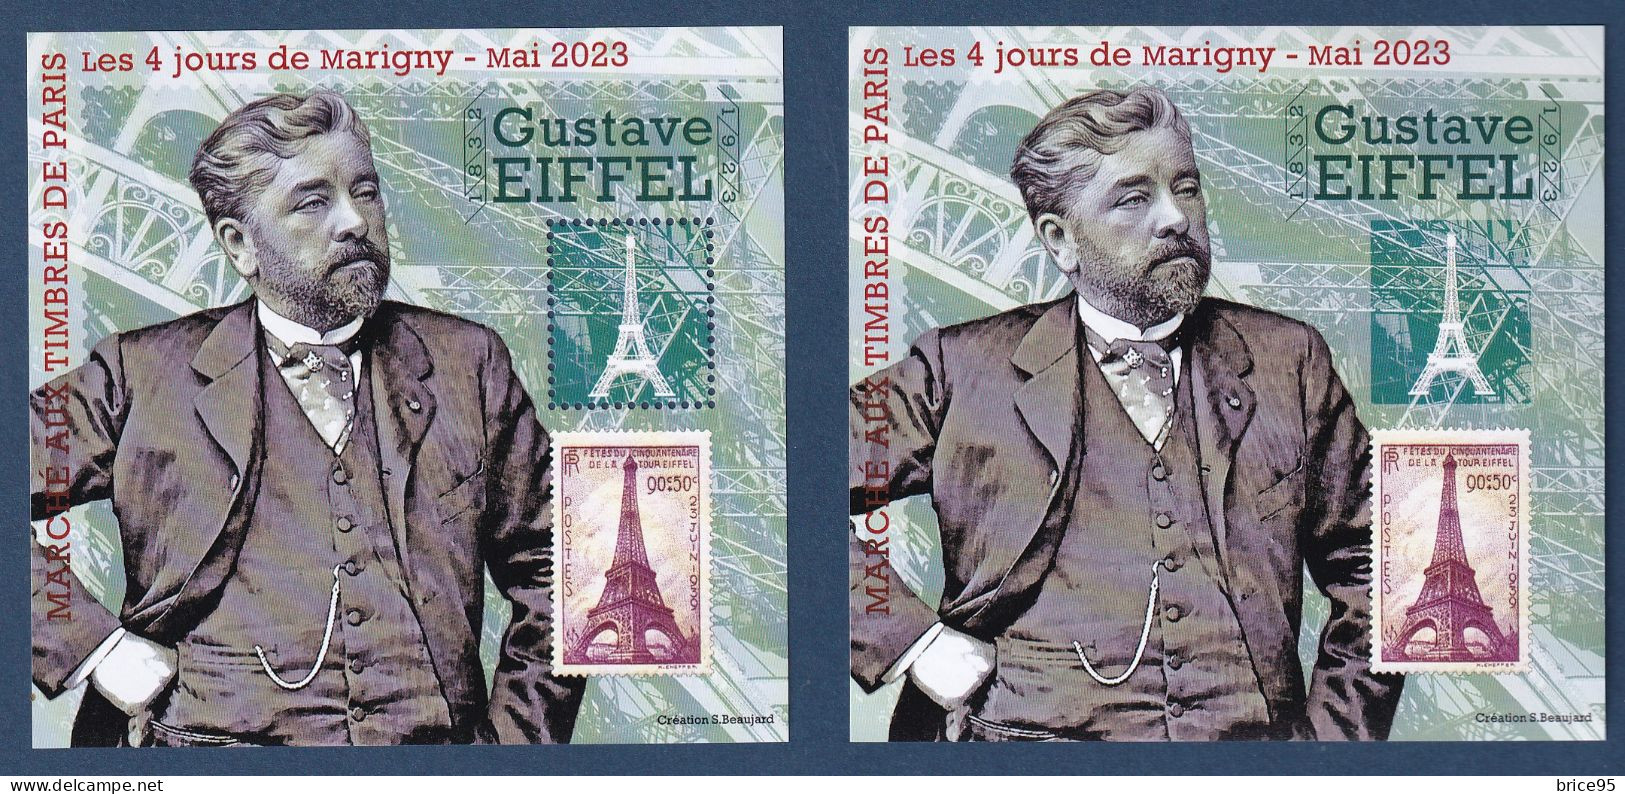 France - Bloc Marigny - Gustave Eiffel - 2023 - Blocs Souvenir